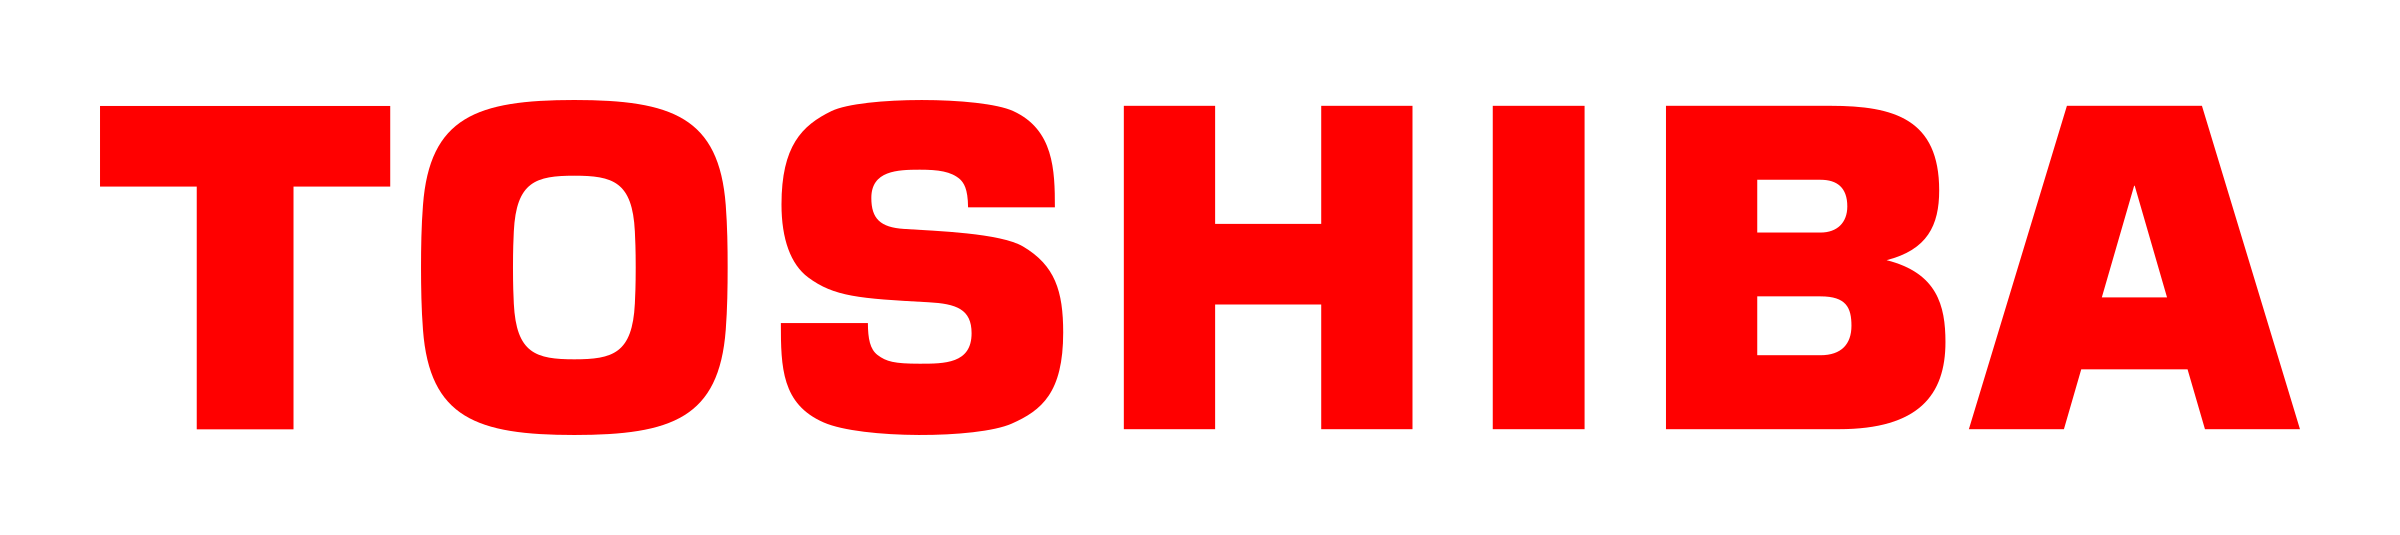 logo of Toshiba